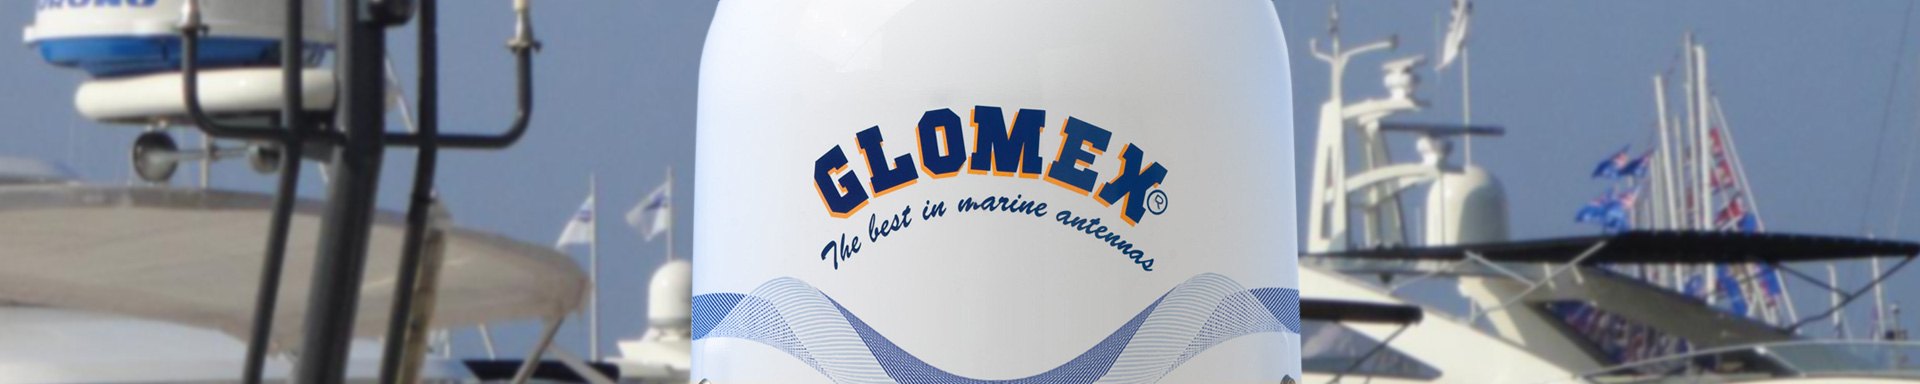 Glomex Boat Alarm Systems